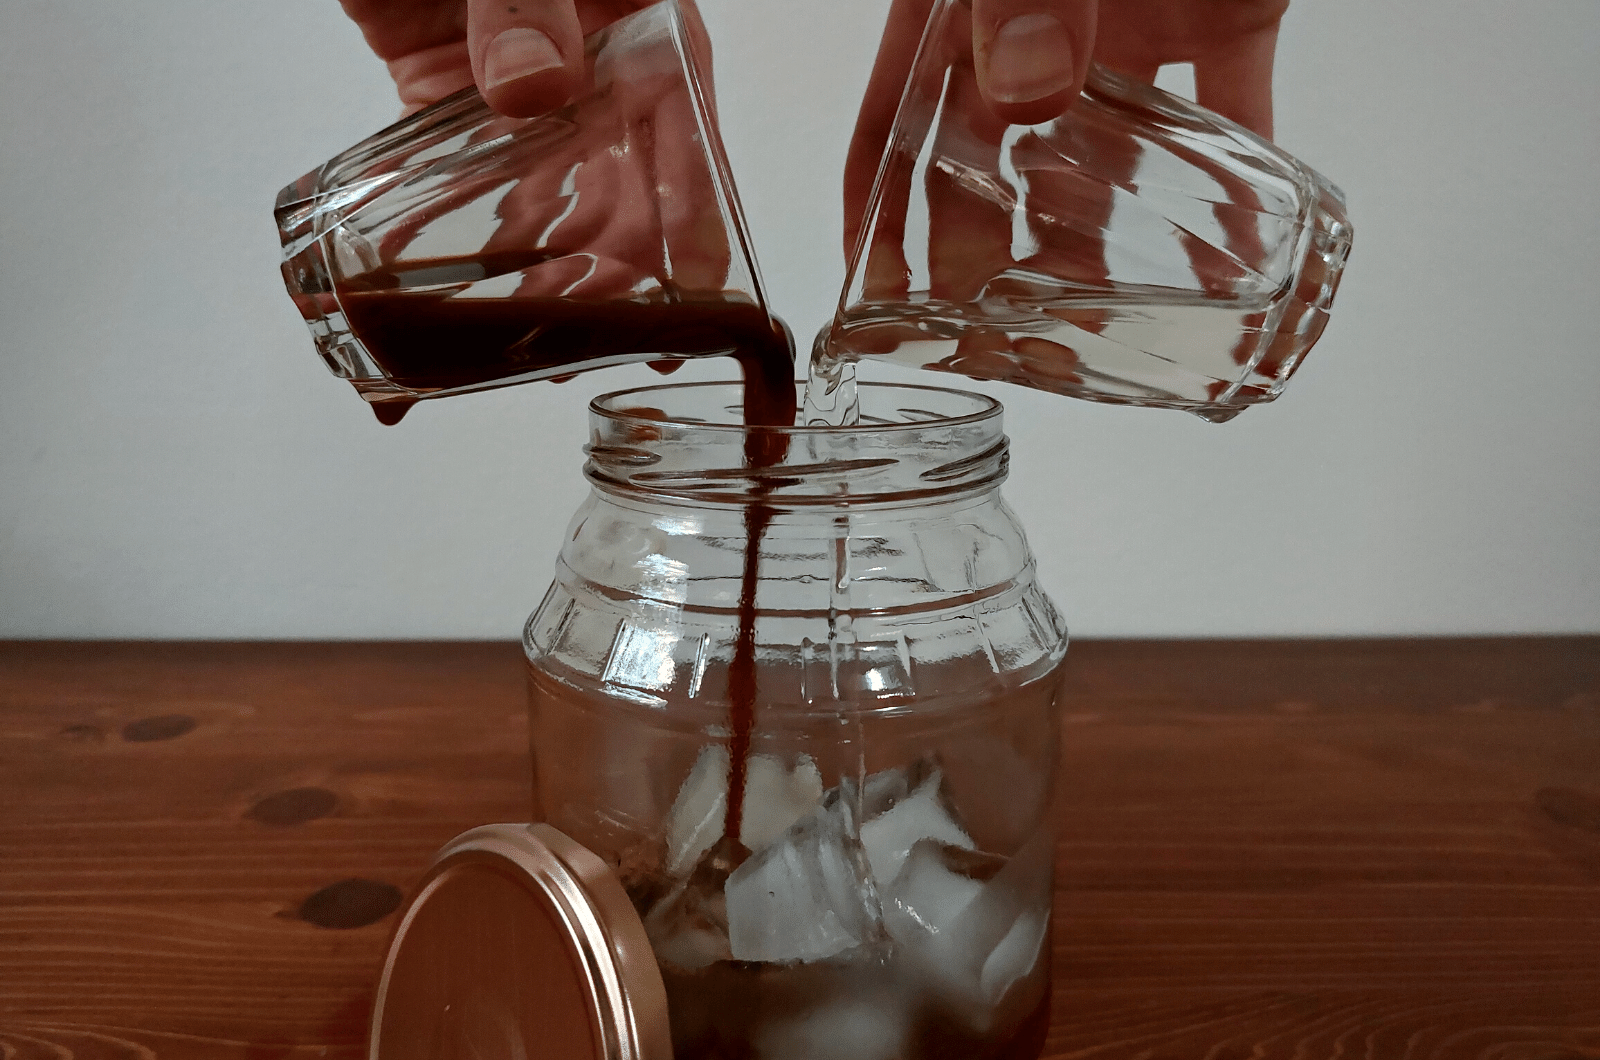 pouring espresso and sugar syrup in jar